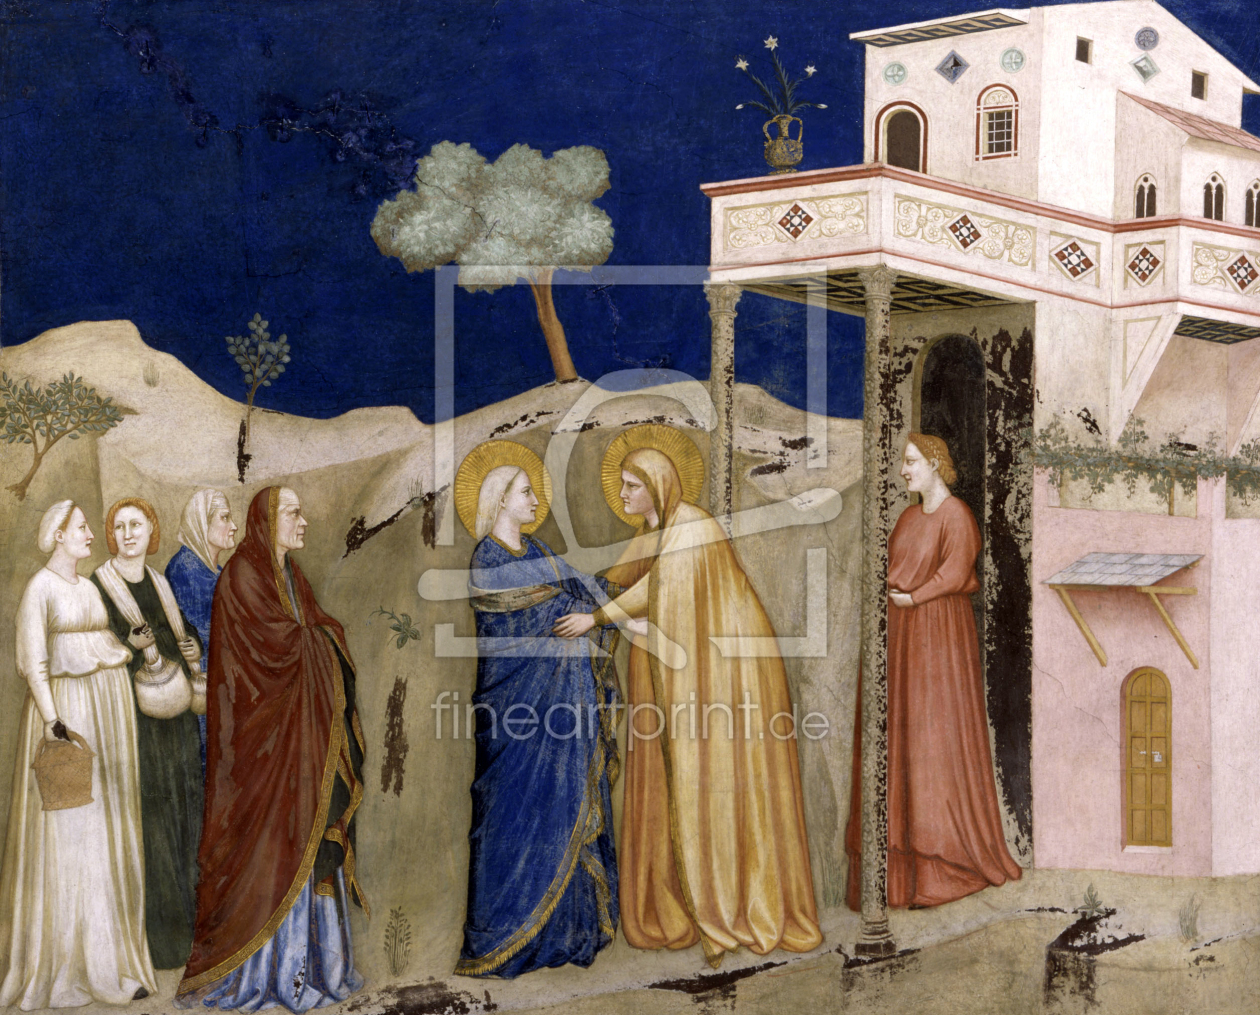 Bild-Nr.: 30001896 Giotto / Home-seeking / Assisi erstellt von Giotto di Bondone